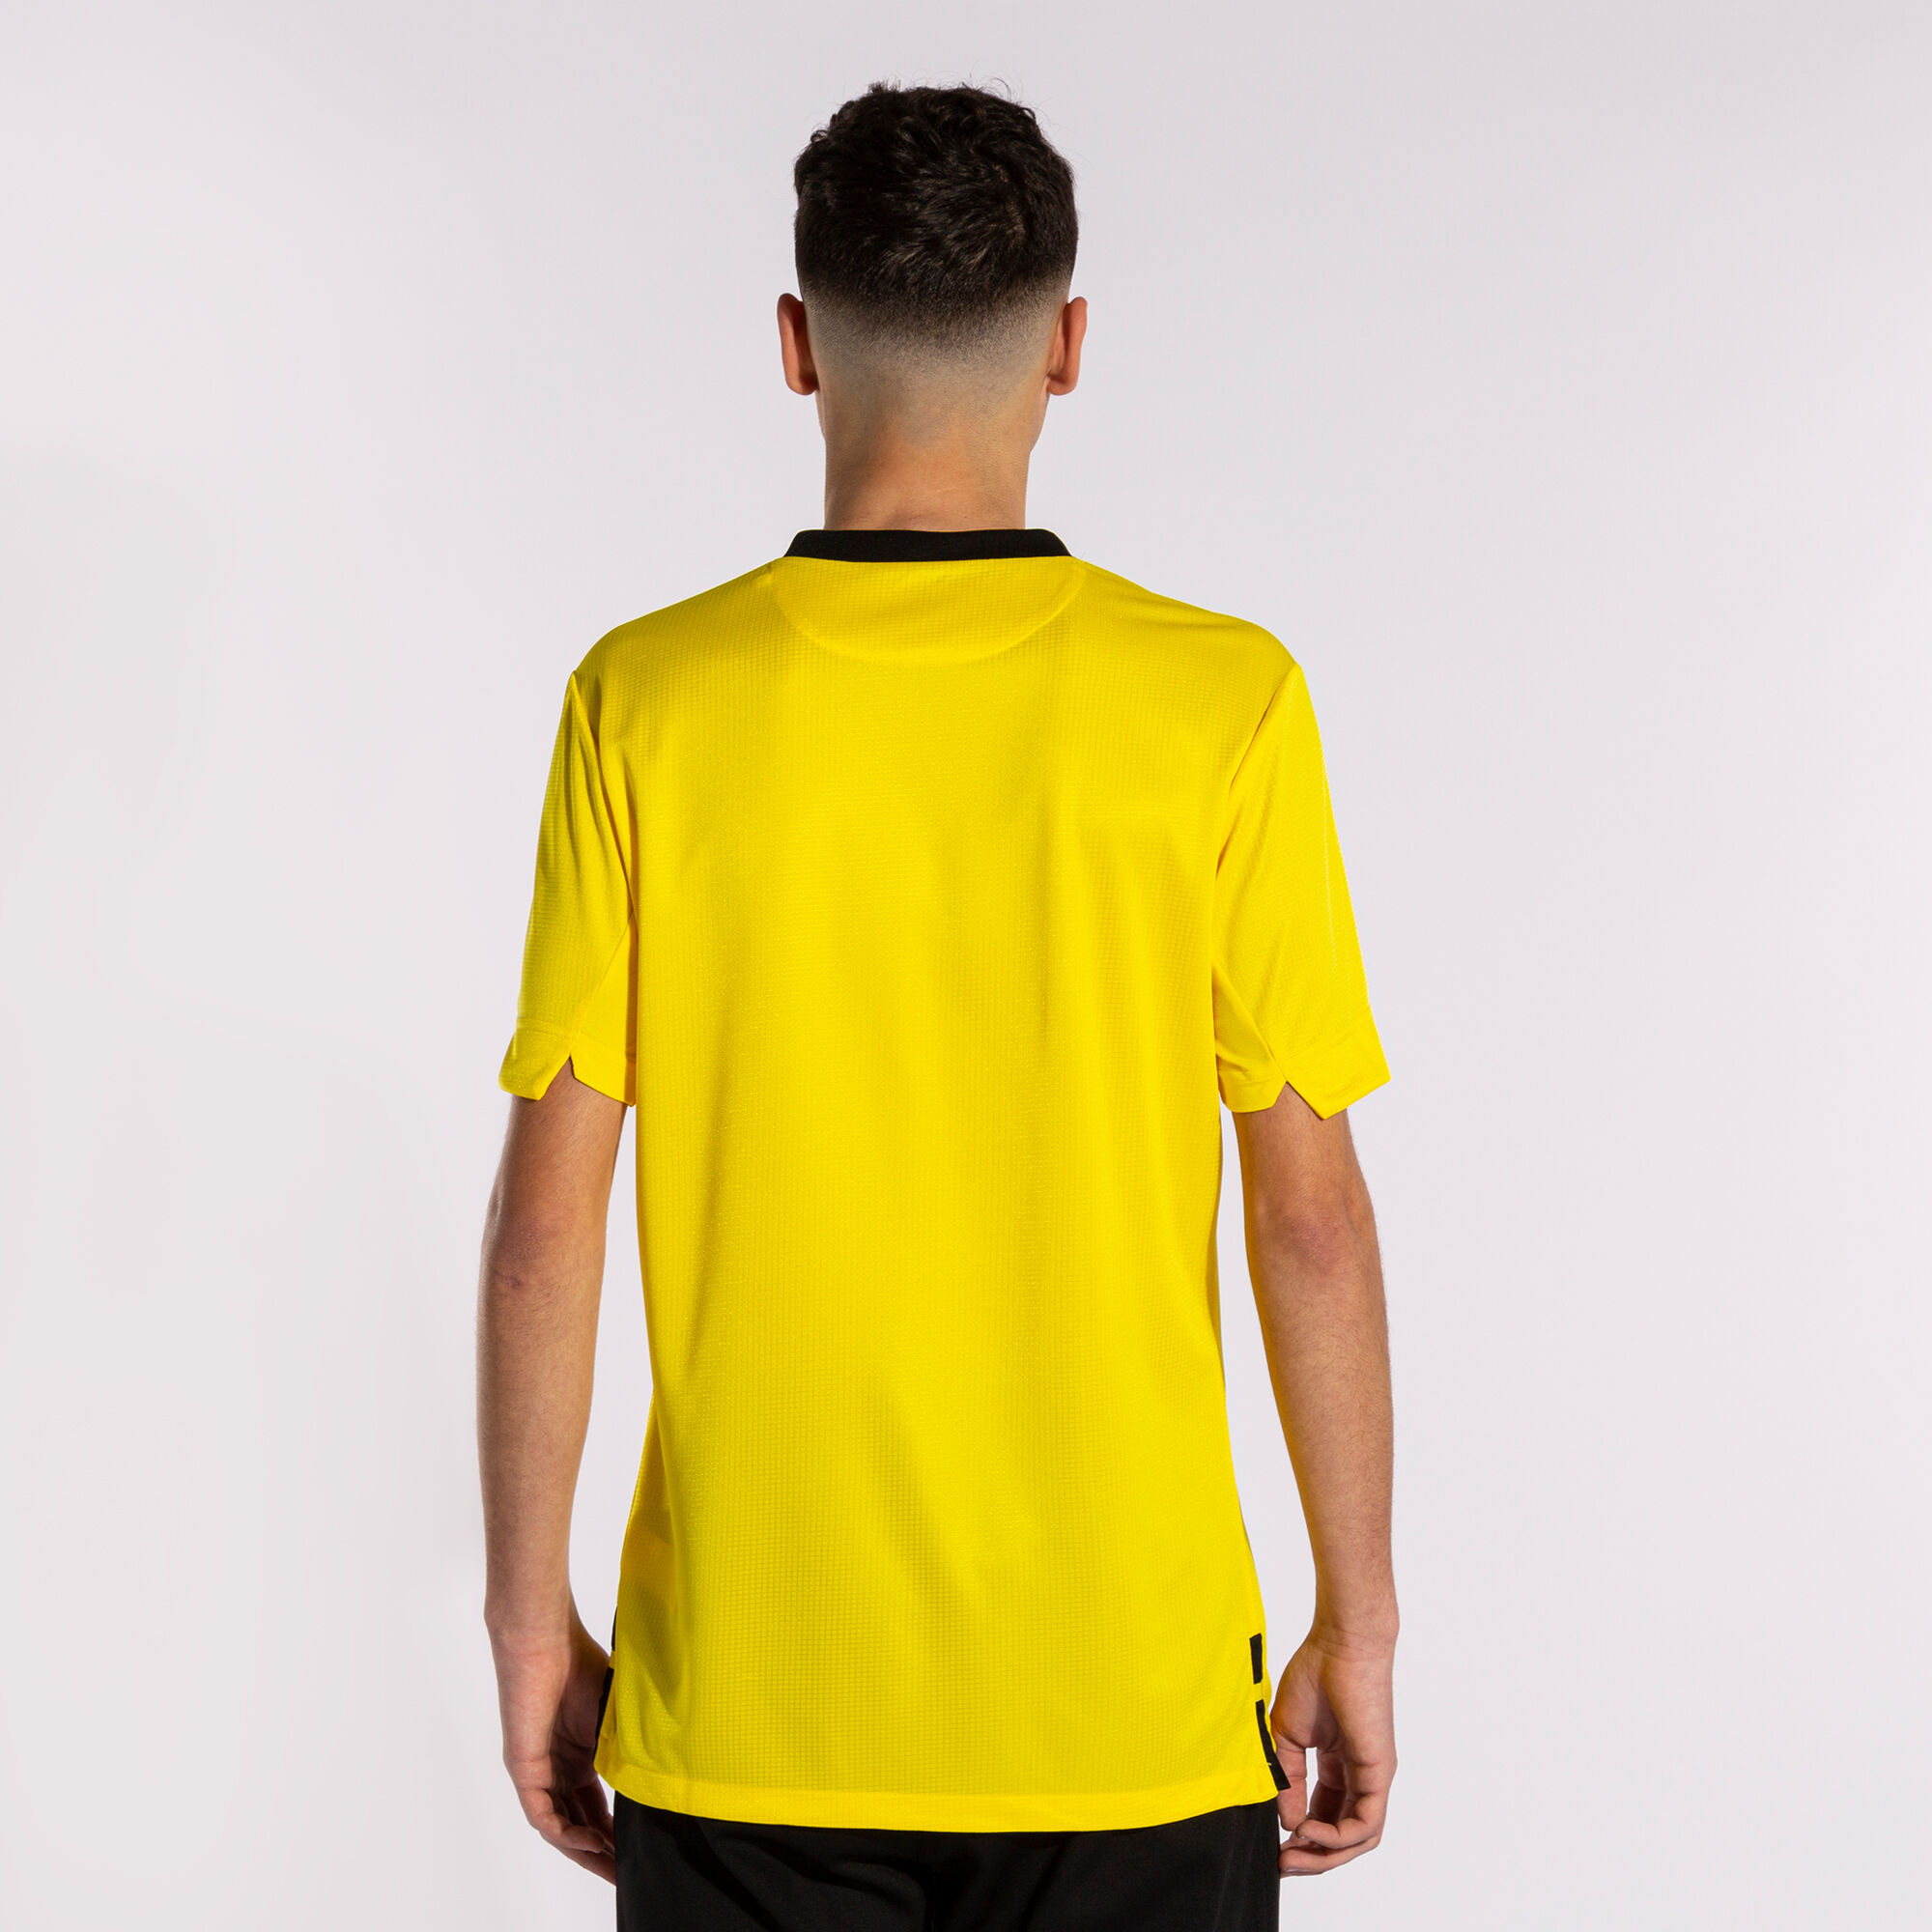 Camiseta manga corta hombre Gold IV amarillo negro